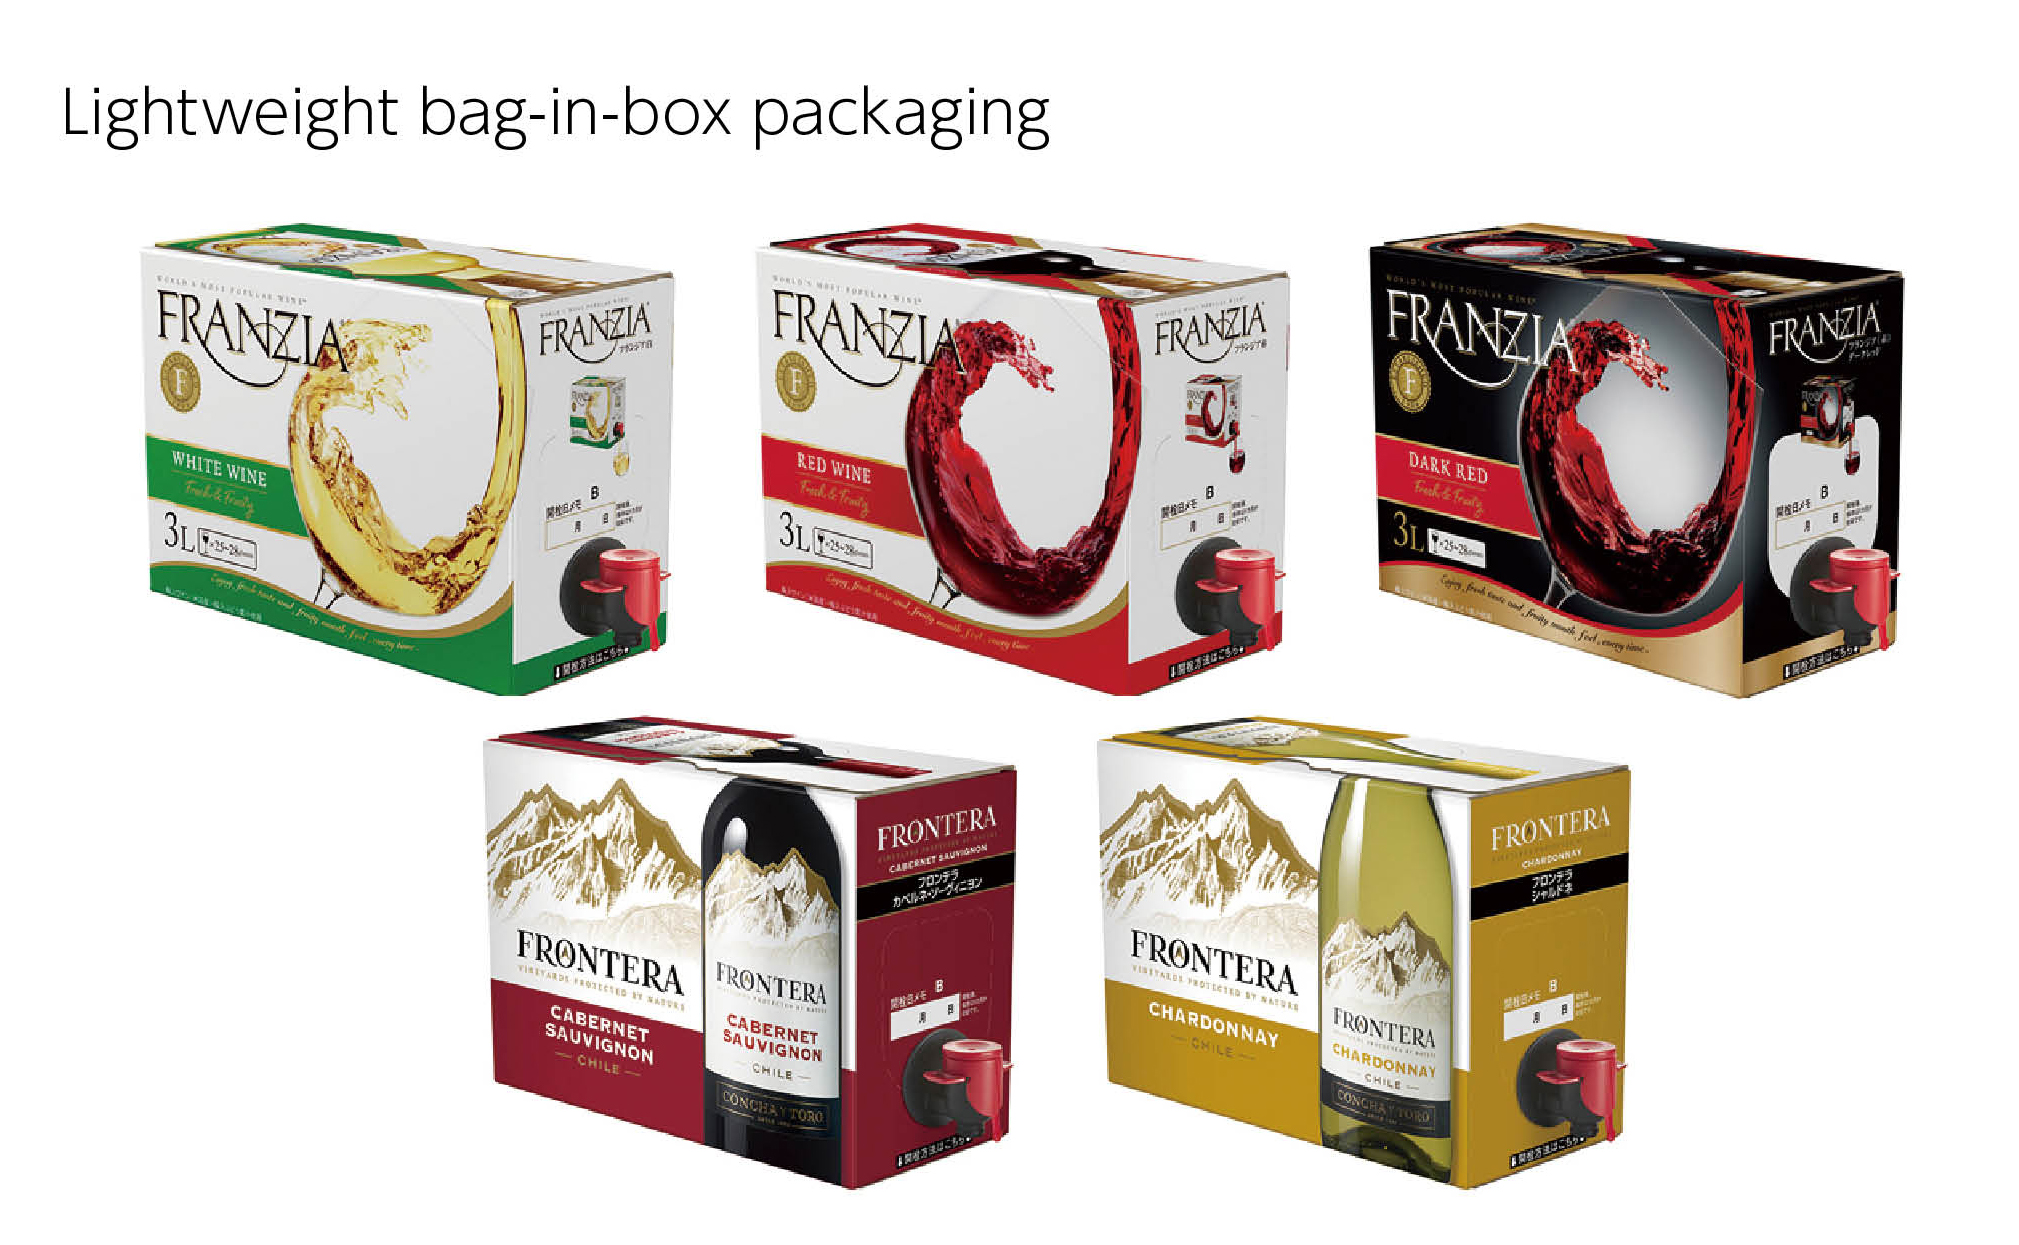 Figure: Lightweight bag-in-box packaging